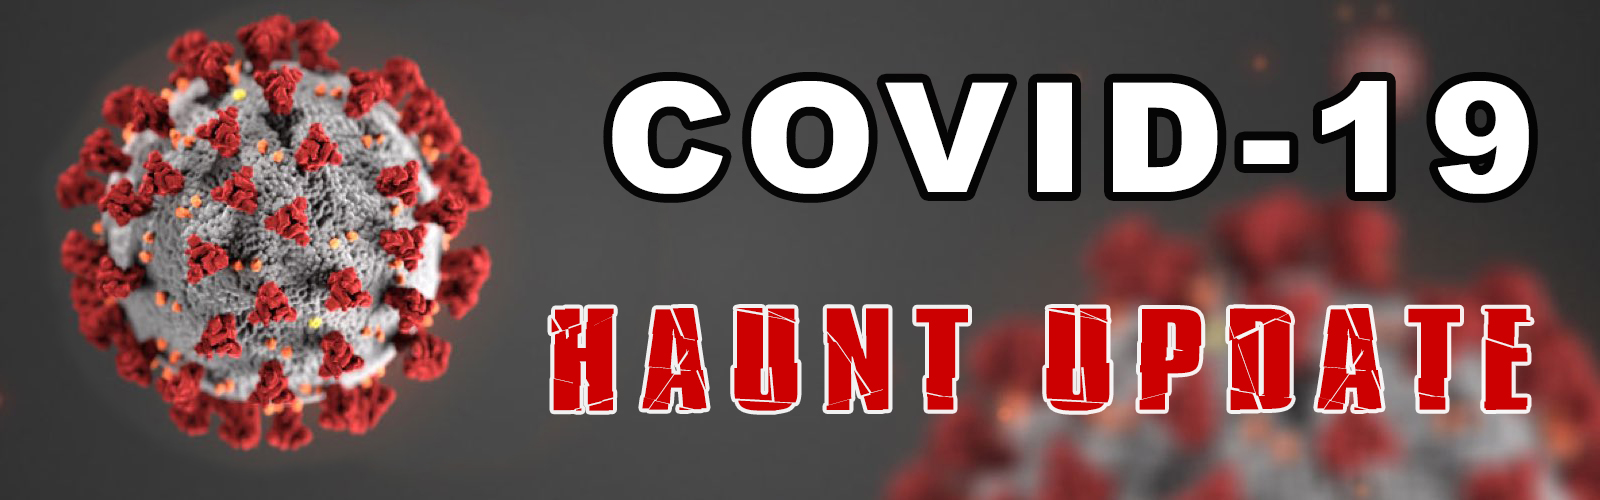 Covid Haunt background-1600x500